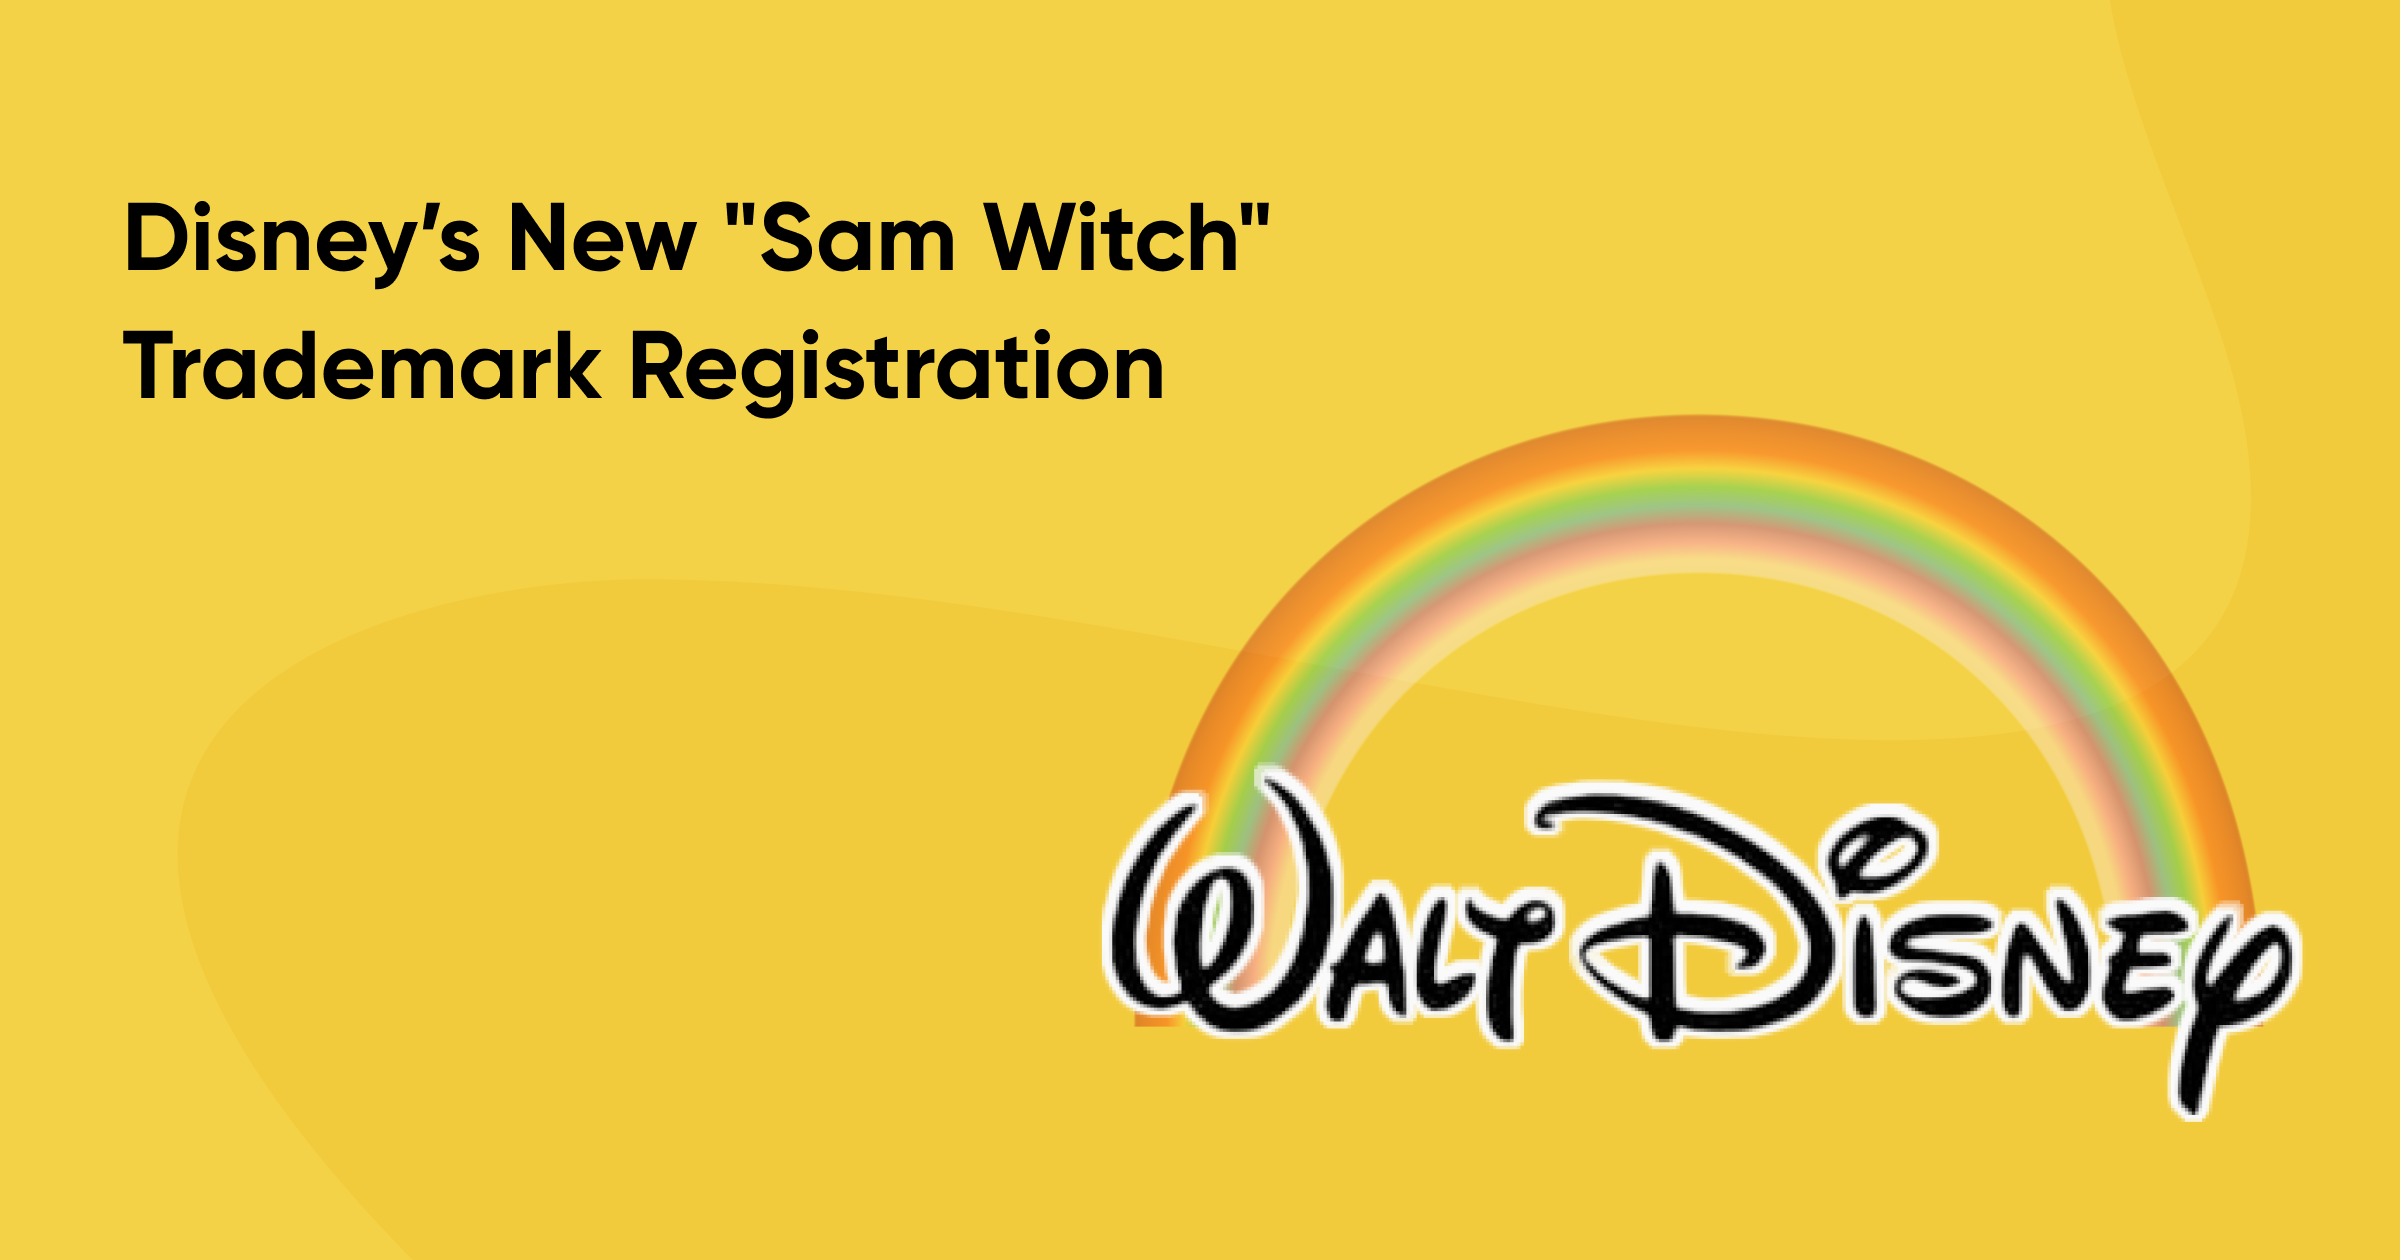 Disney’s New "Sam Witch" Trademark Registration